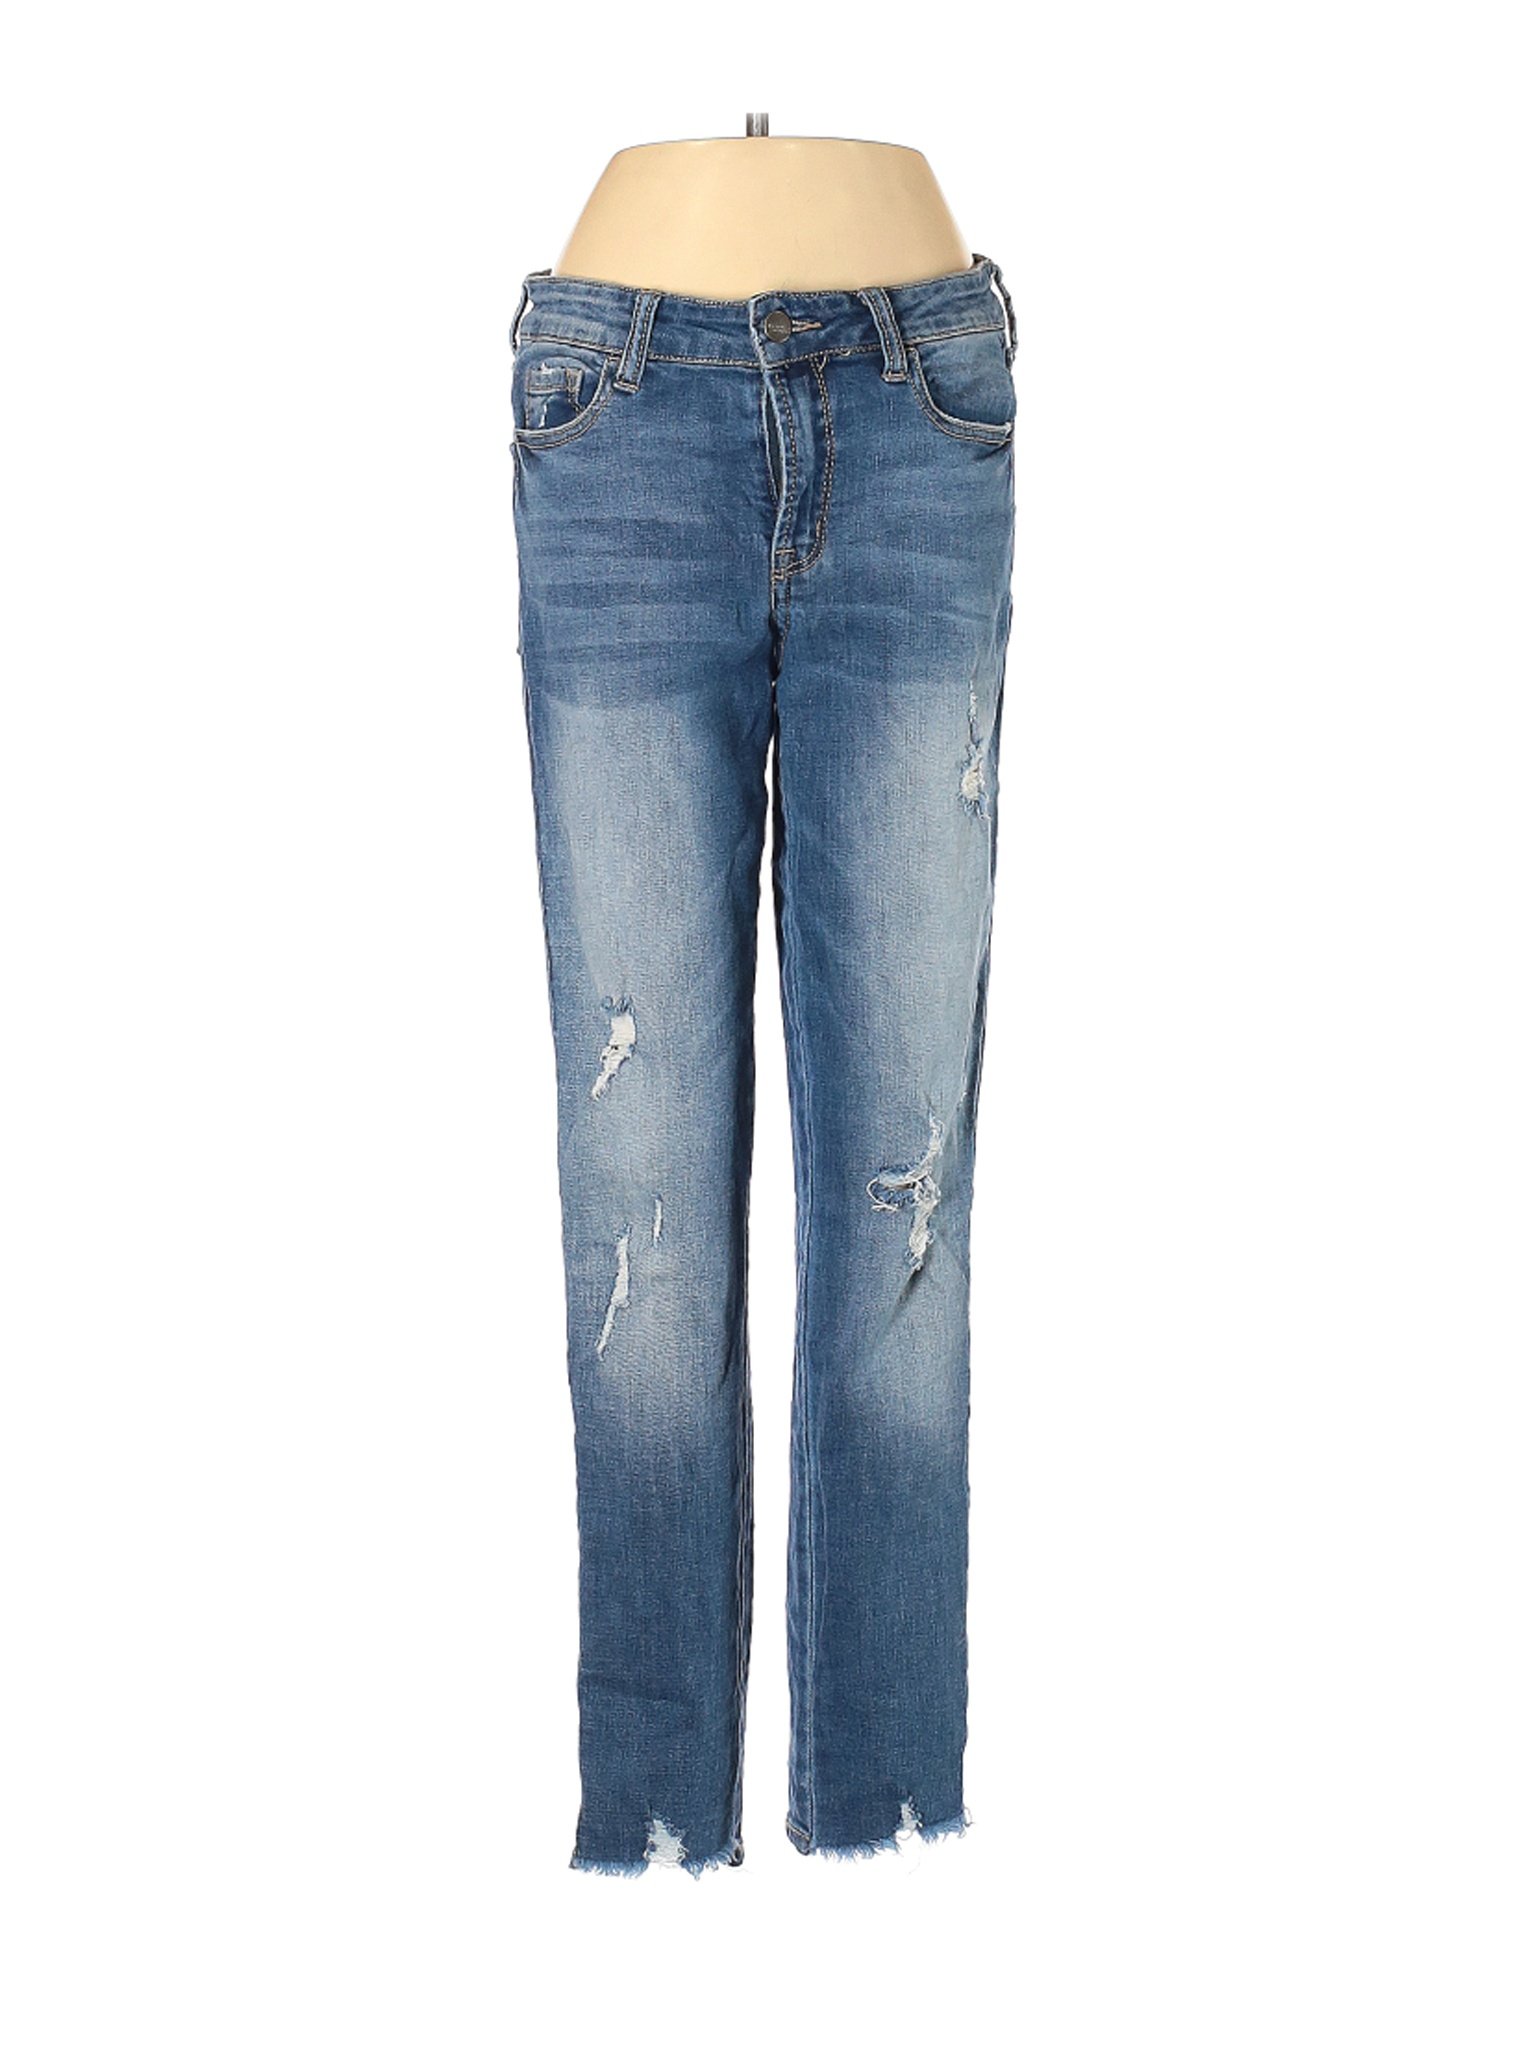 Vervet Women Blue Jeans 27W | eBay